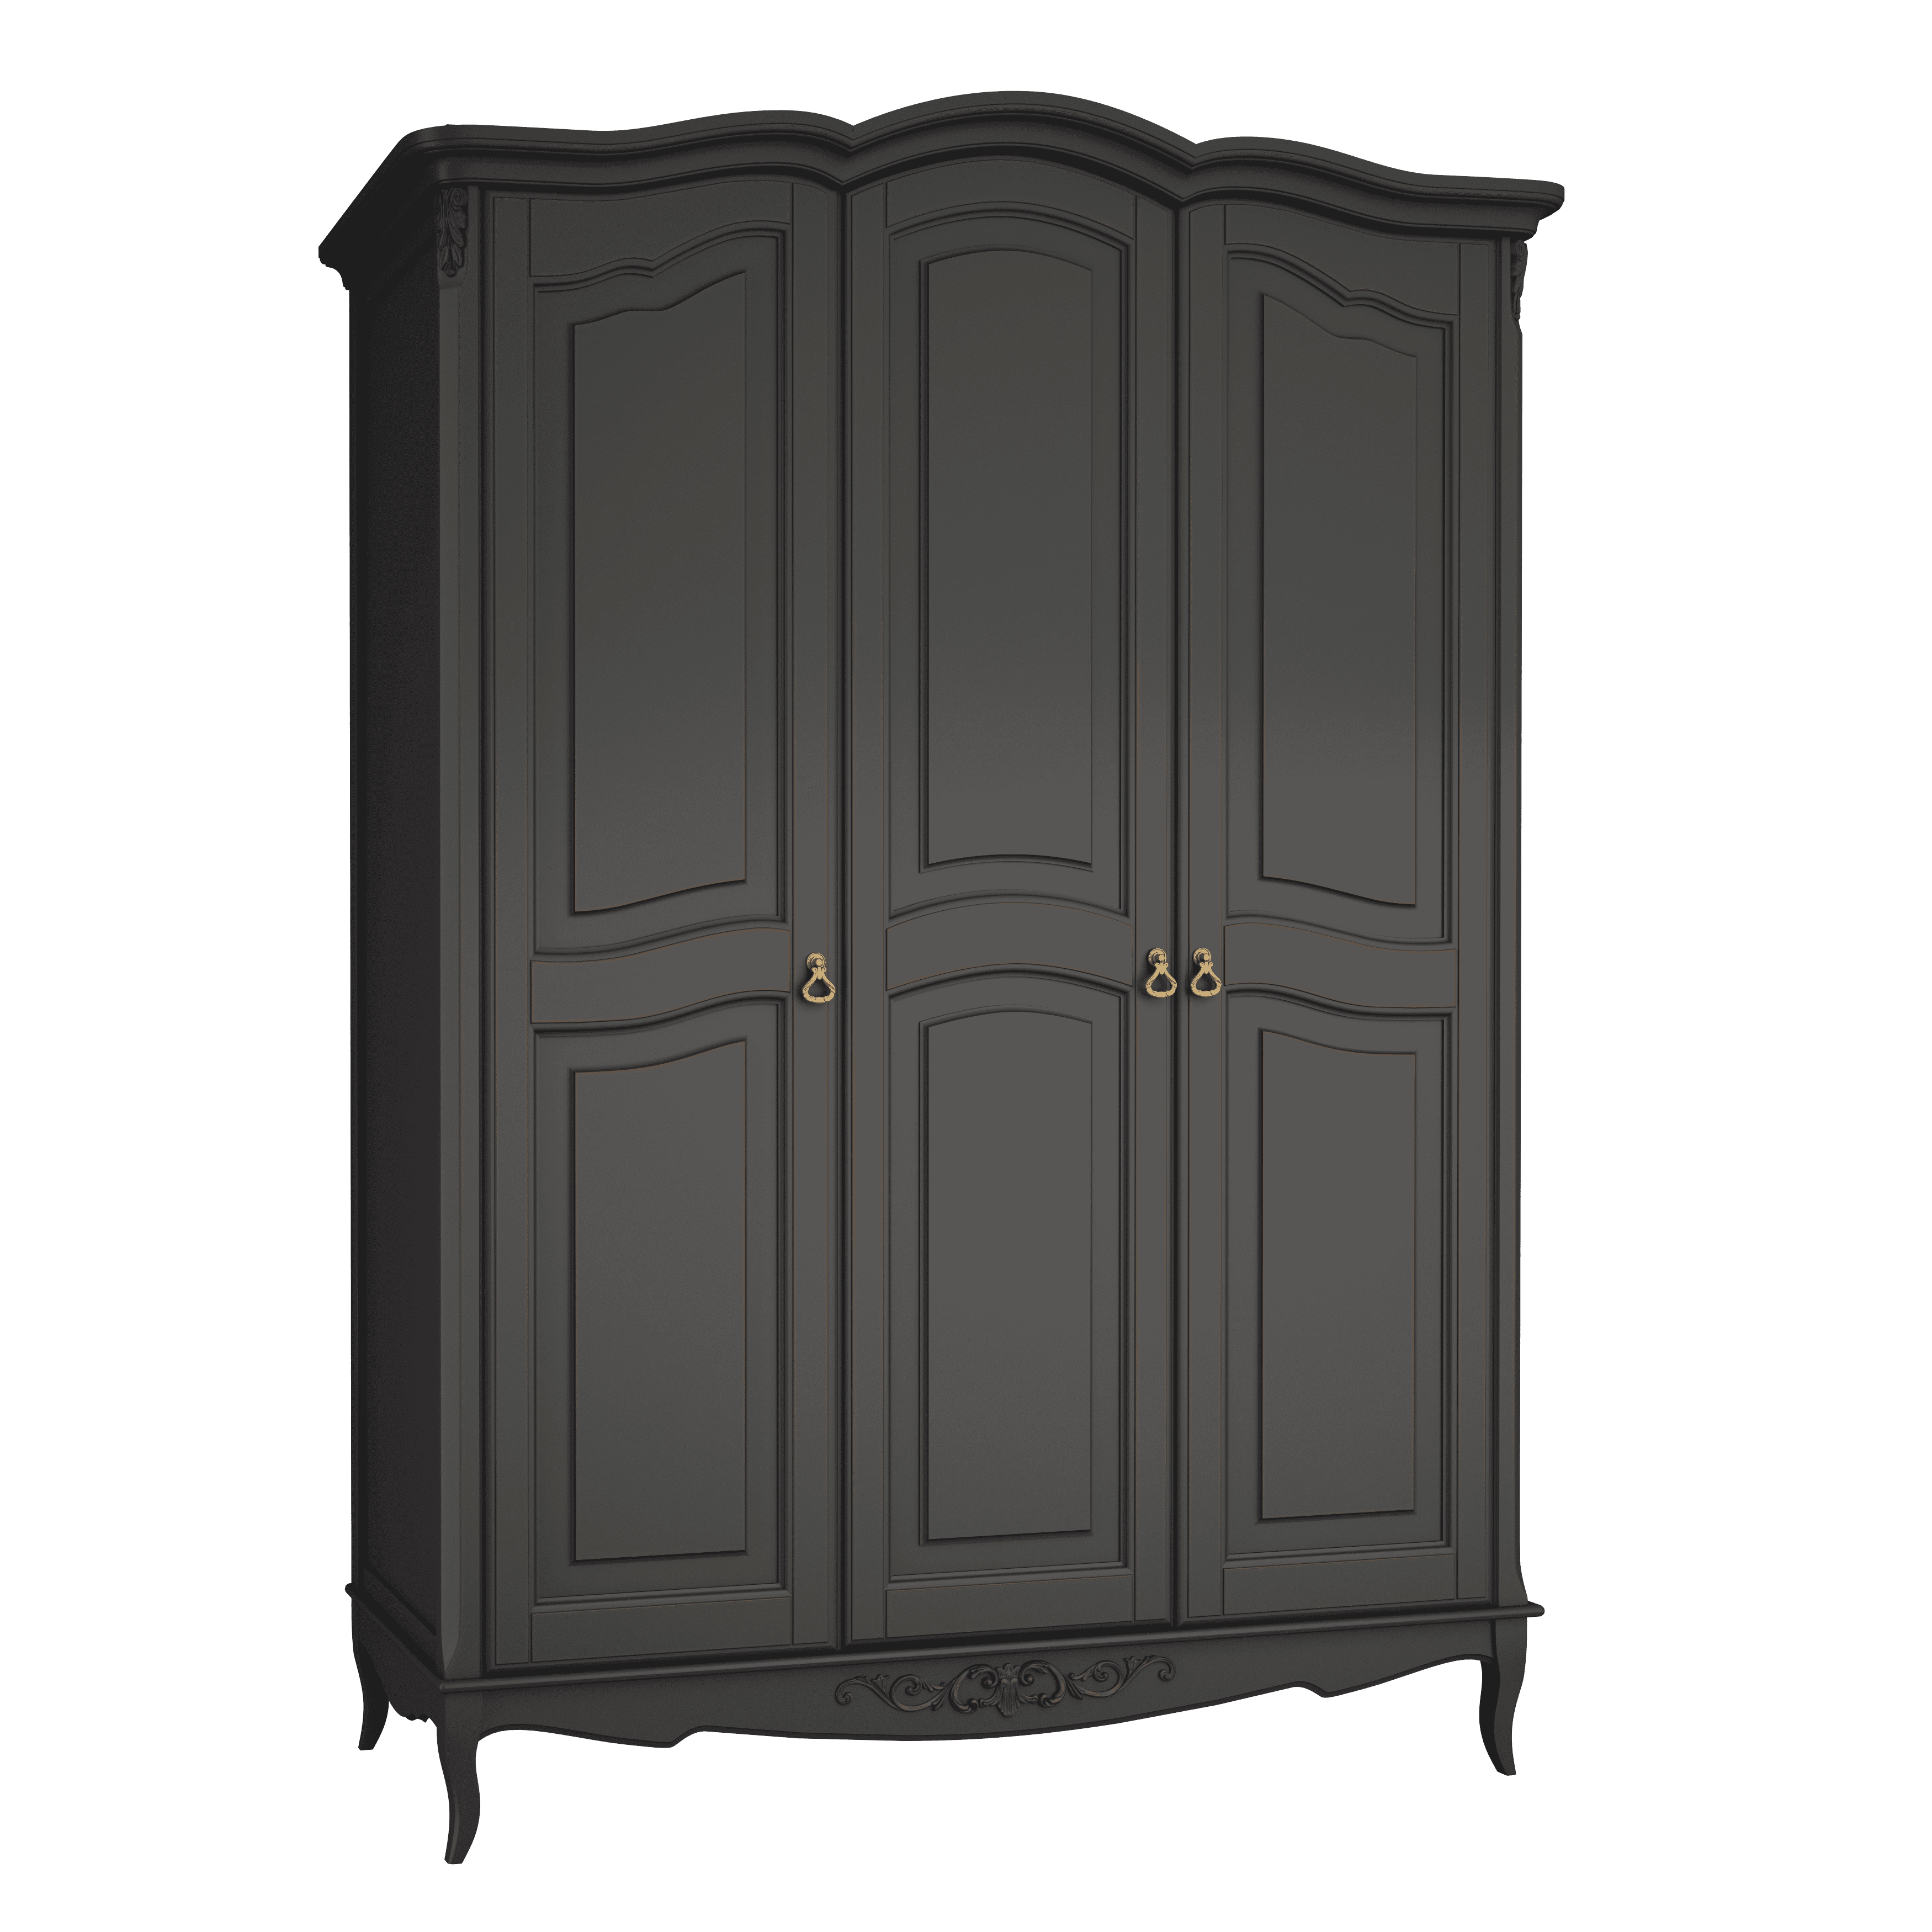 Шкаф платяной Aletan Provence, 3-х дверный, цвет: черный (B803BL)B803BL